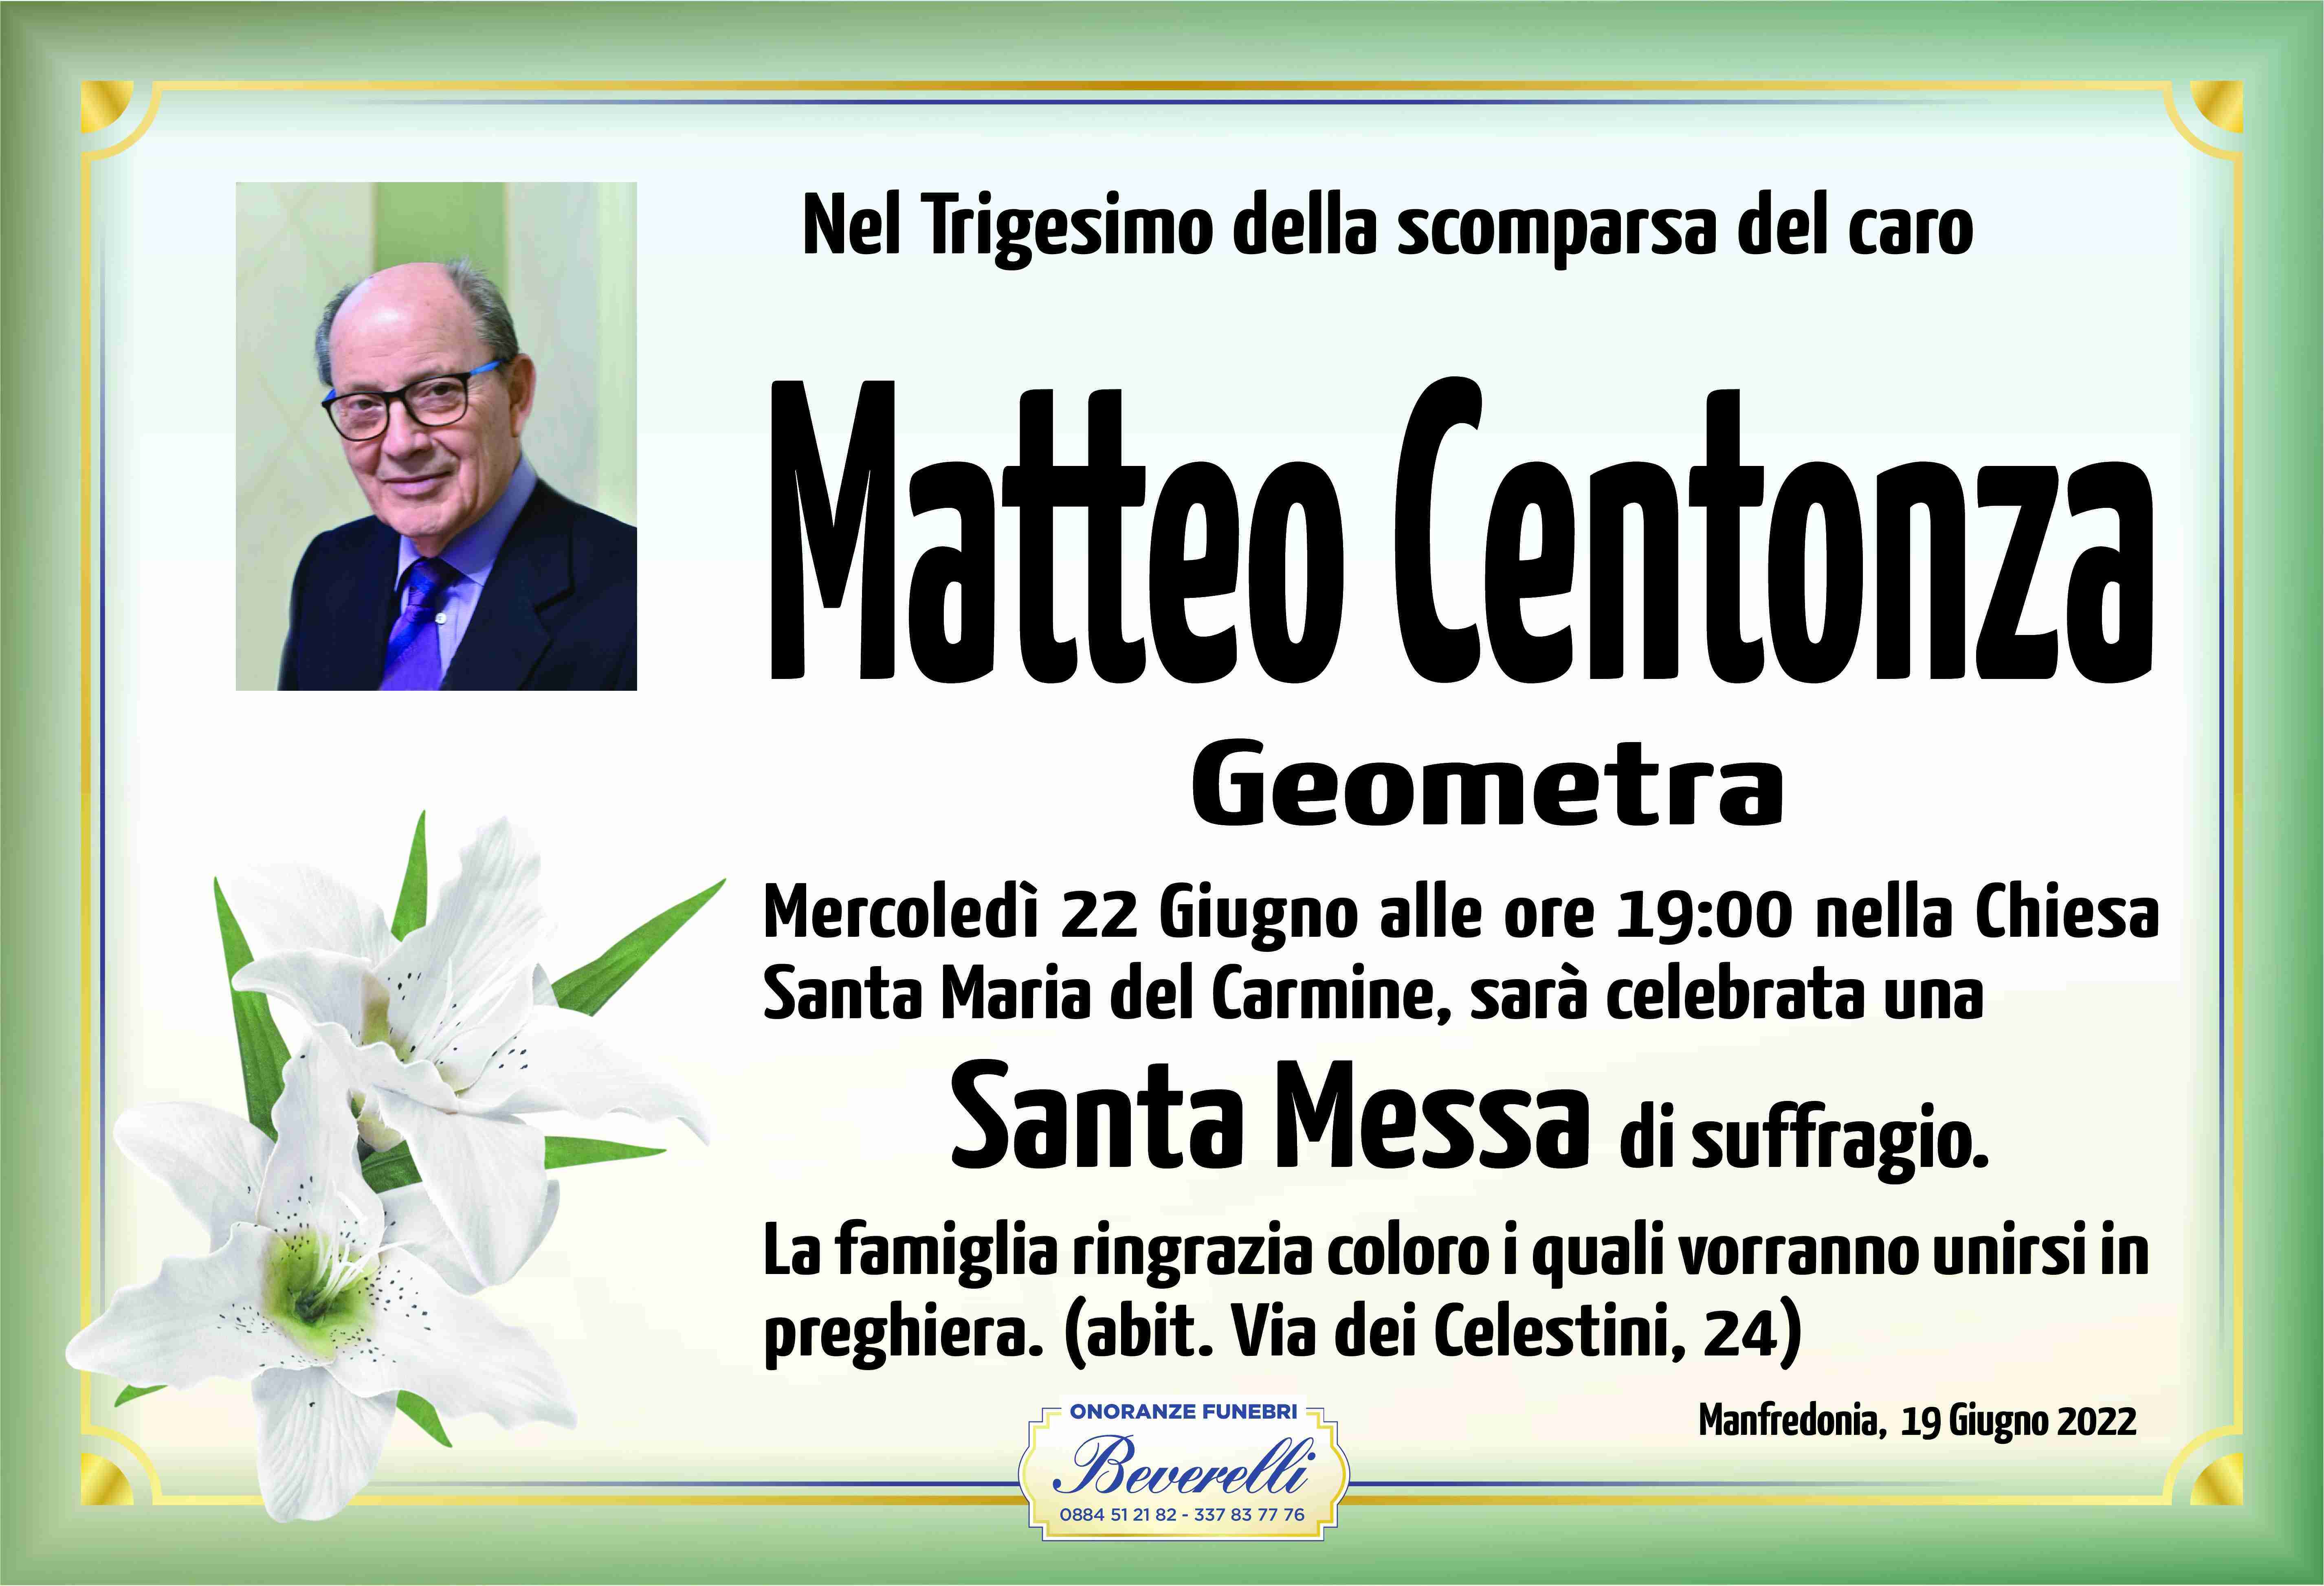 Matteo Centonza